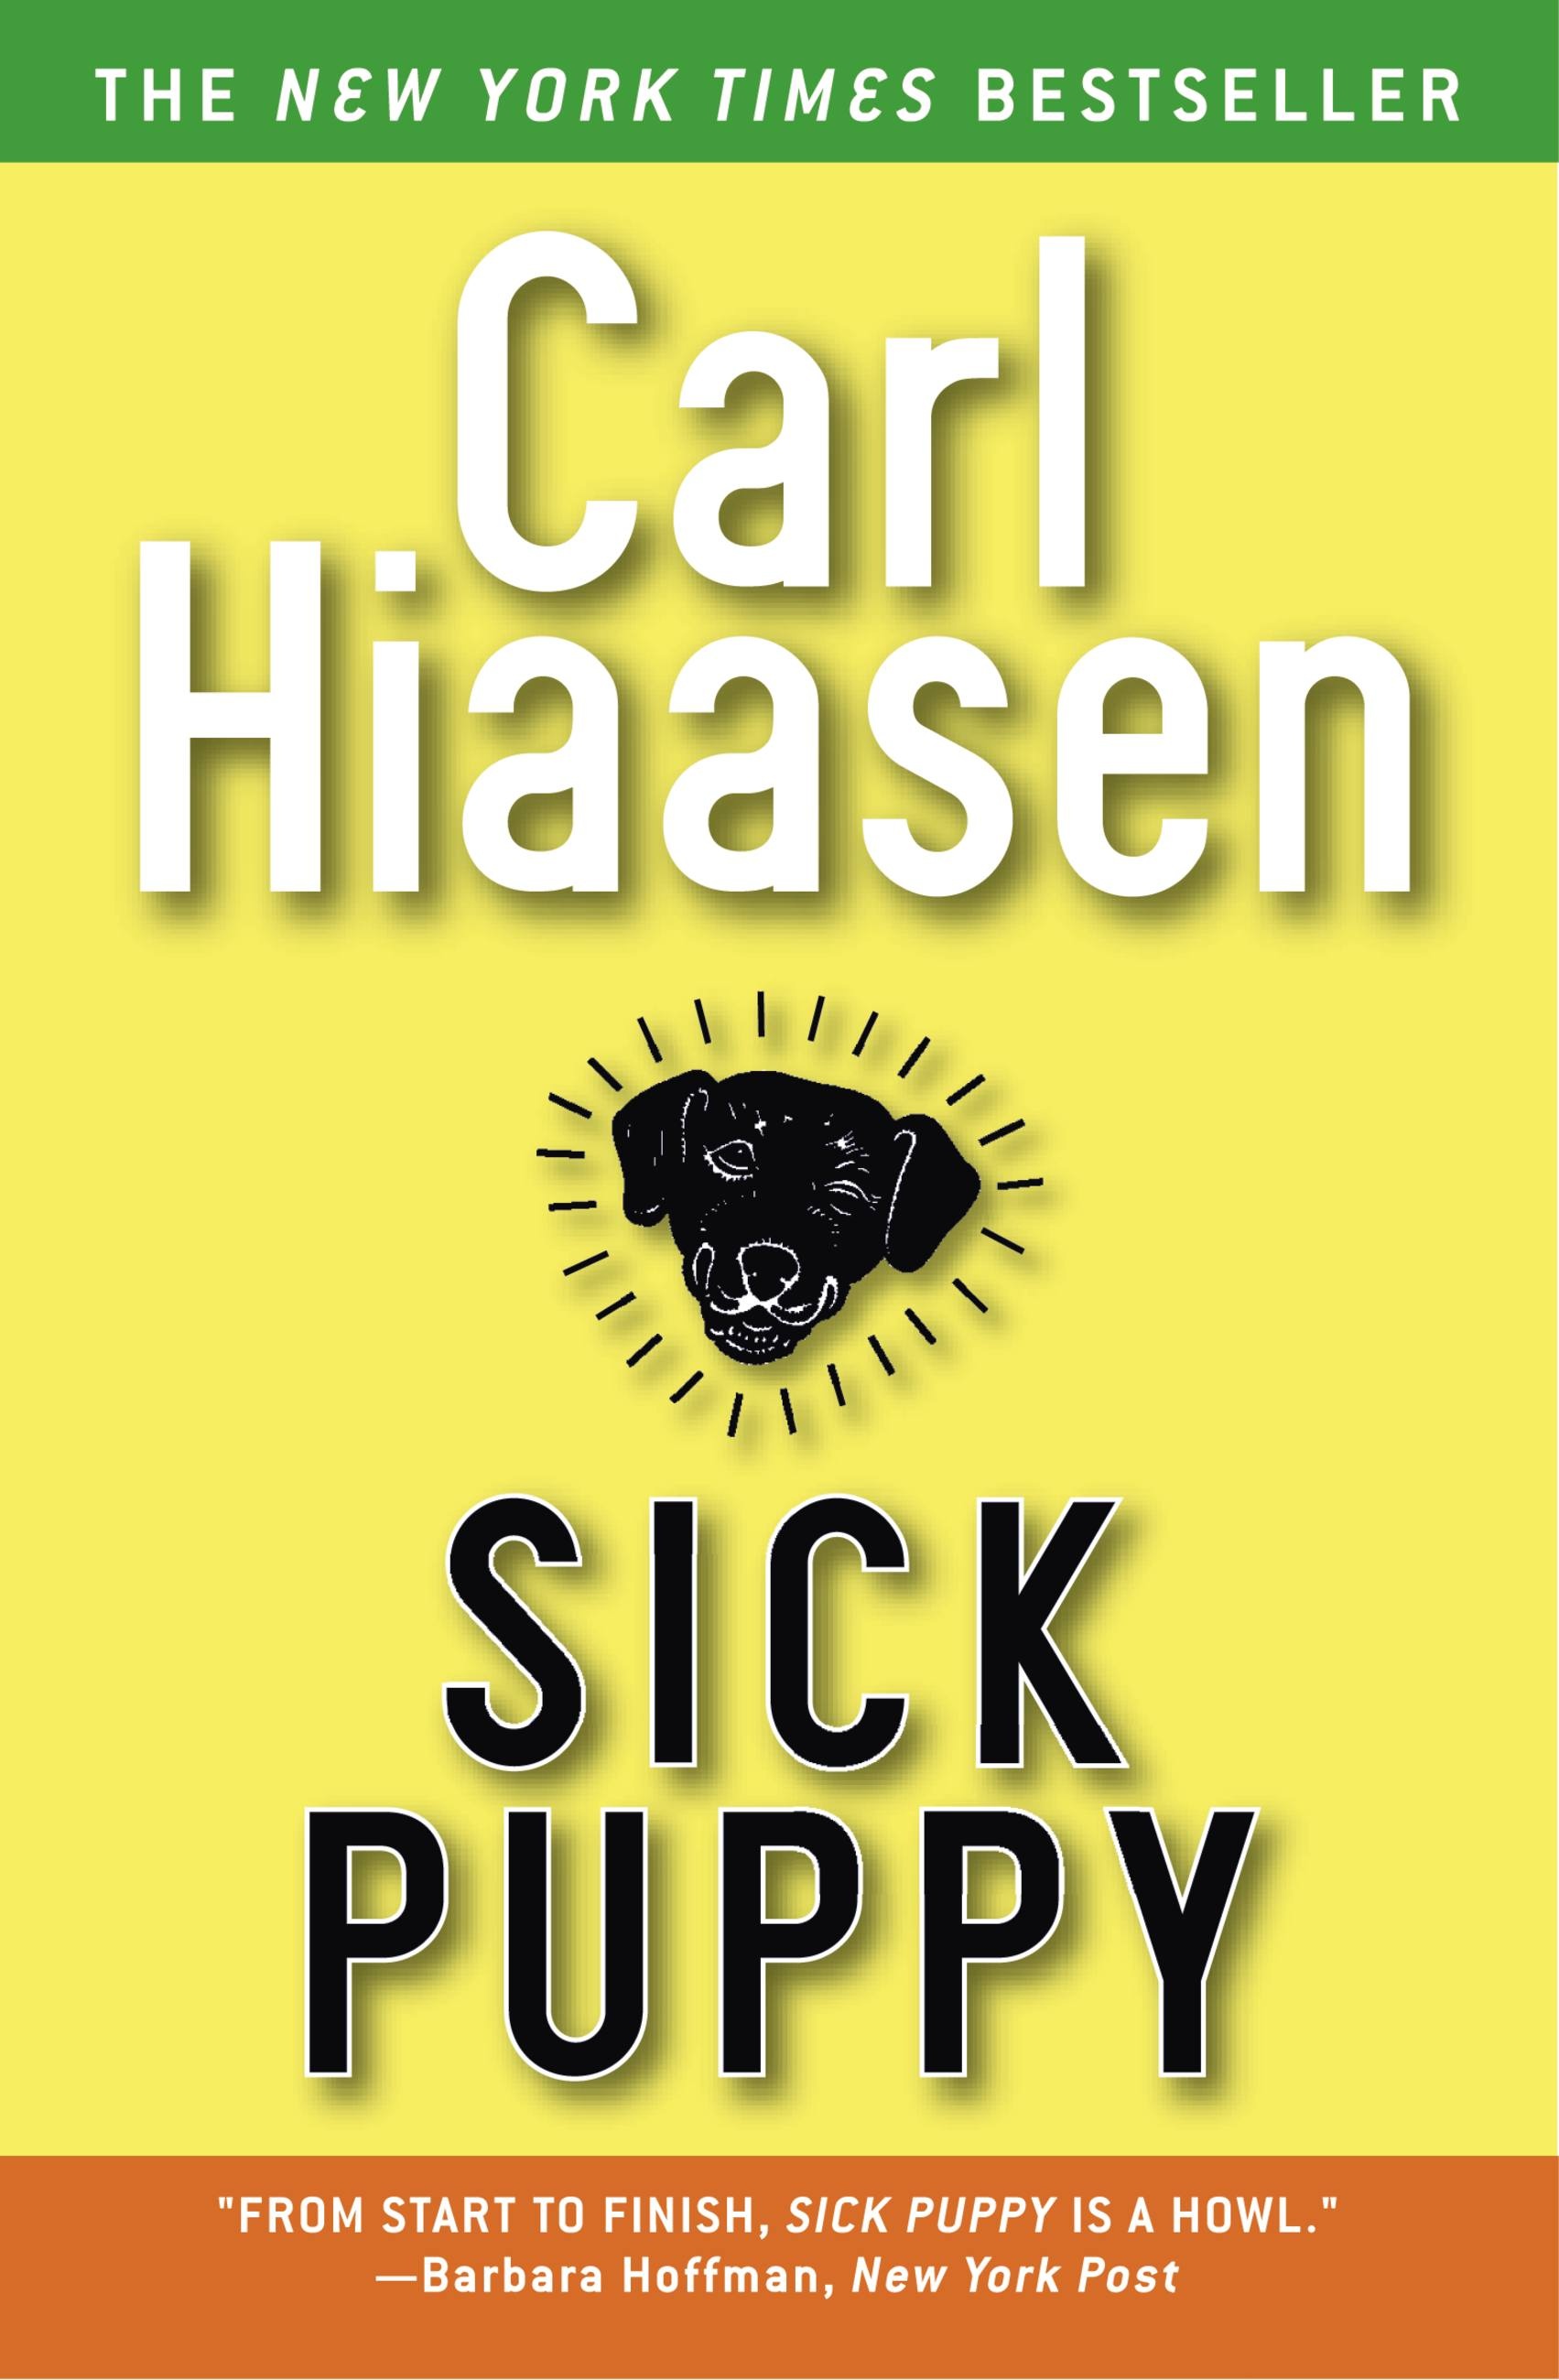 Sick Puppy by Carl Hiaasen Hachette Book Group